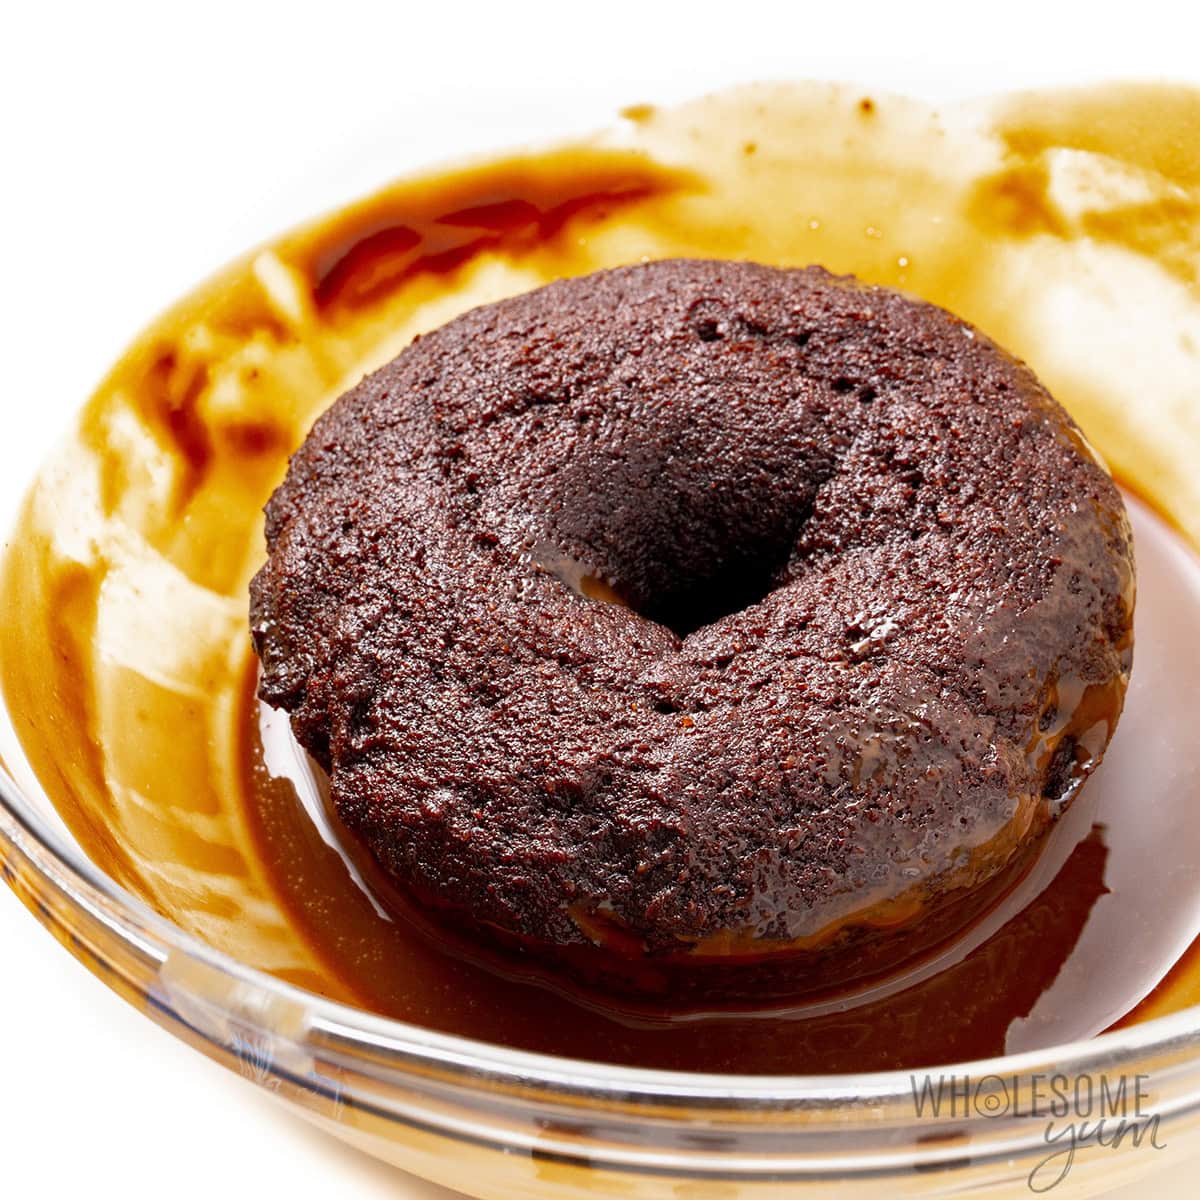 Coating a donut in chocolate glaze.